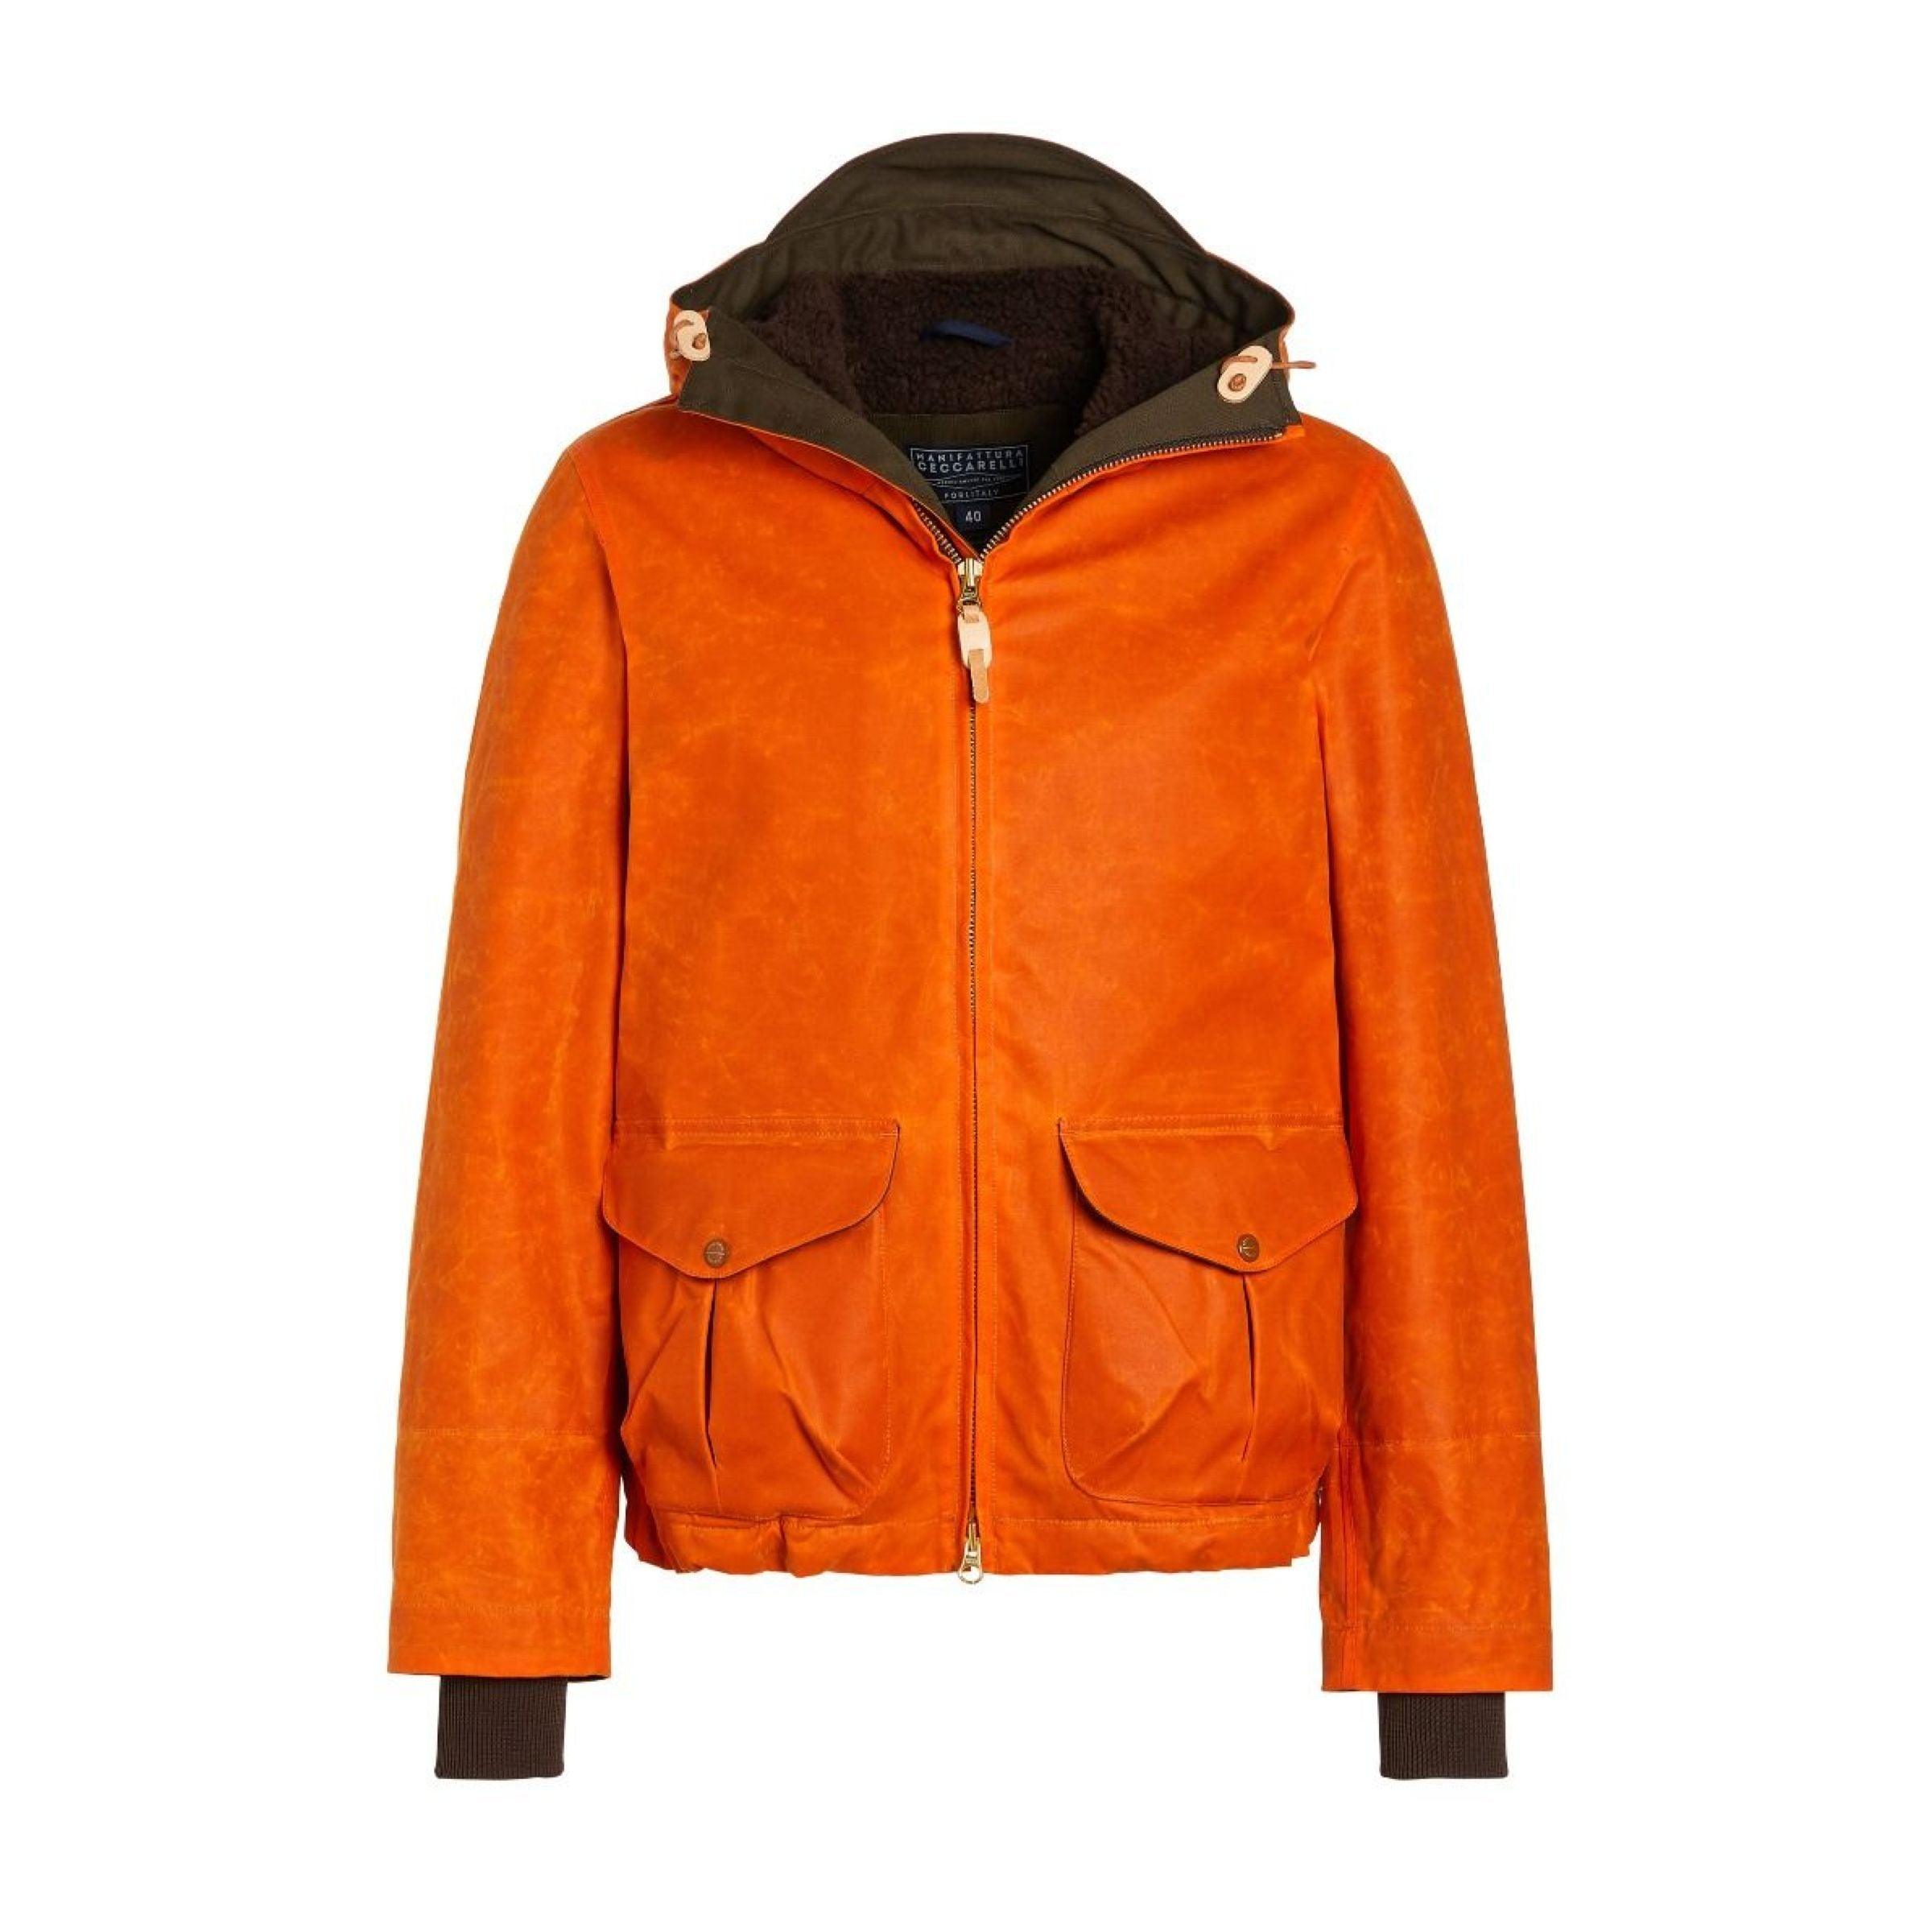 Manifattura Ceccarelli | Giacca Blazer Coat Uomo Orange - Fabbrica Ski Sises